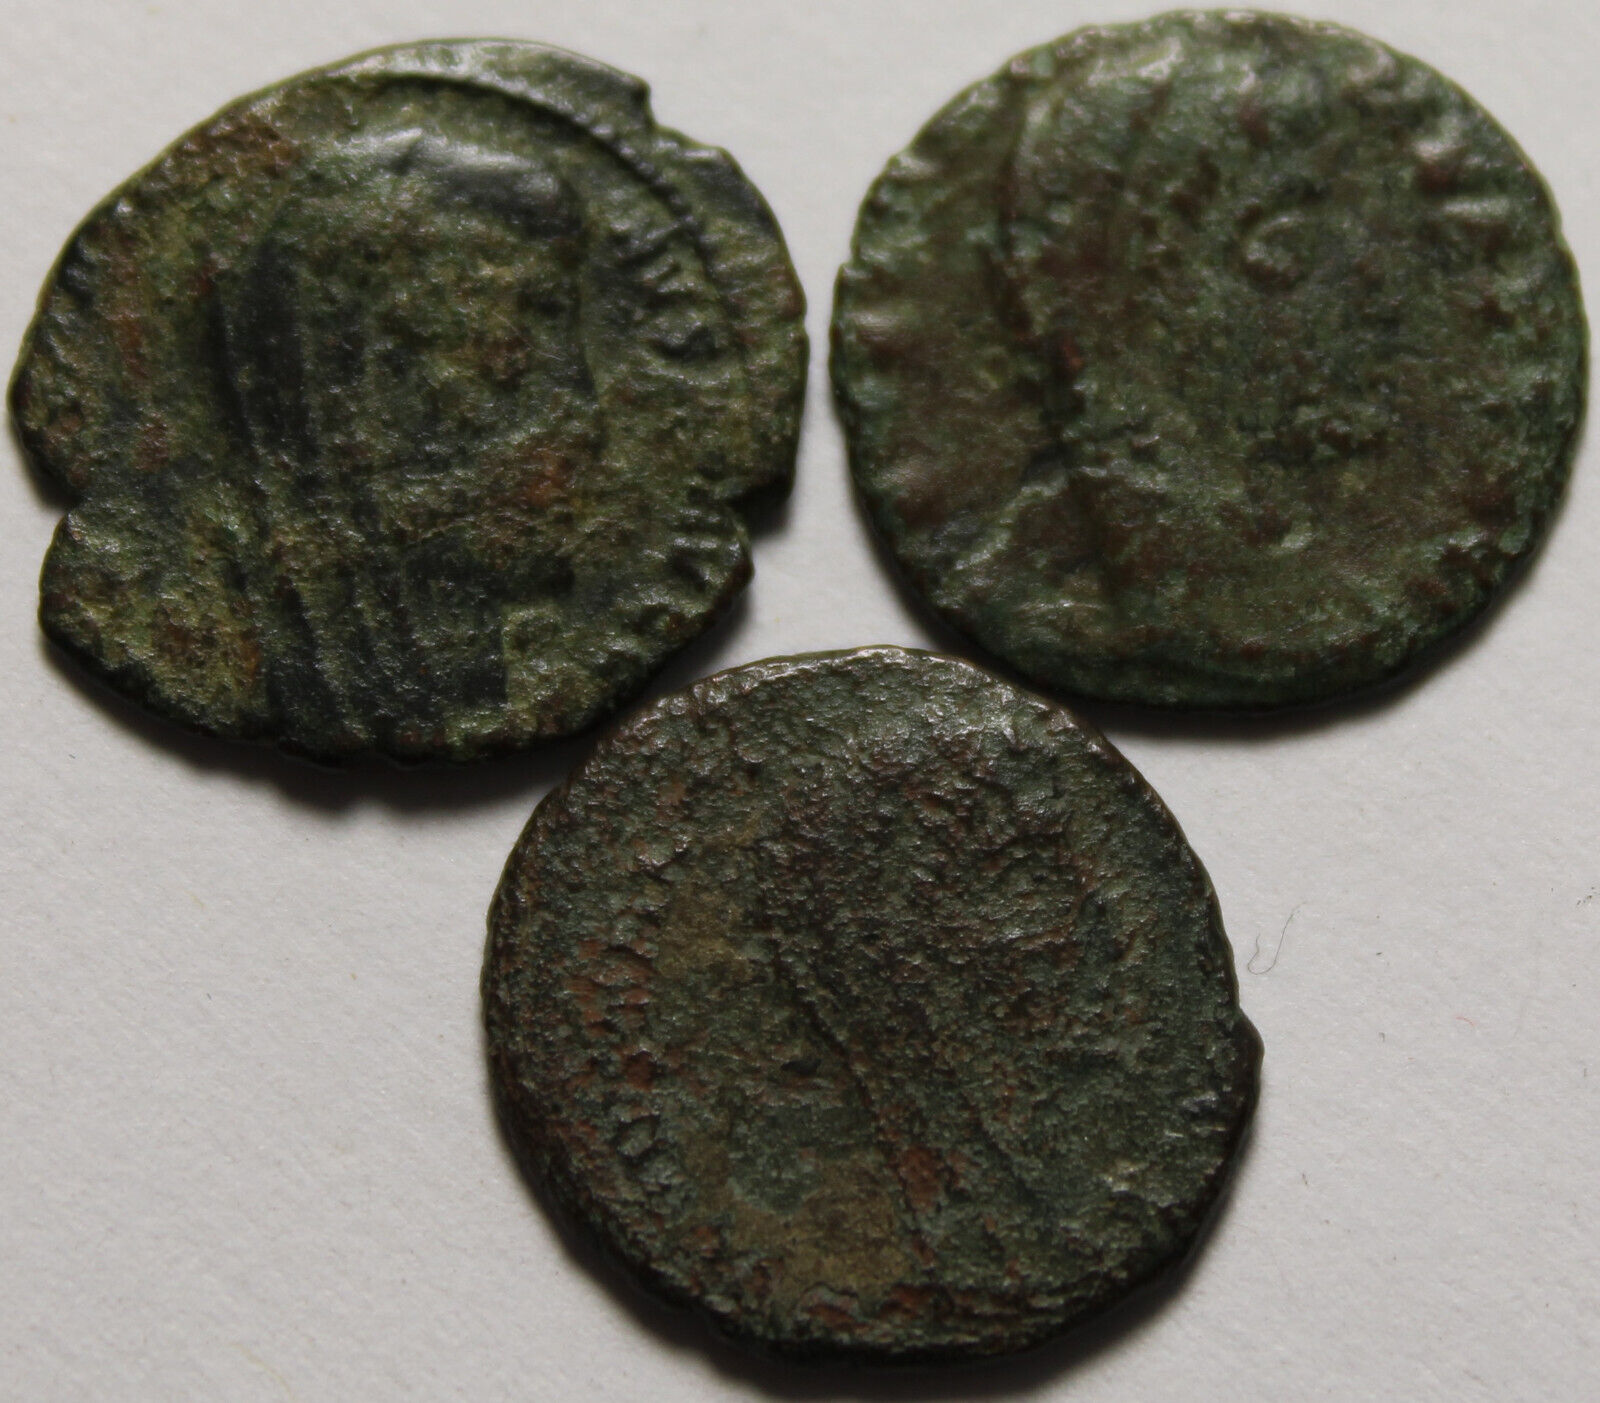 Lot genuine Ancient Roman coins veiled Constantine Victory quadriga hand of God Без бренда - фотография #4